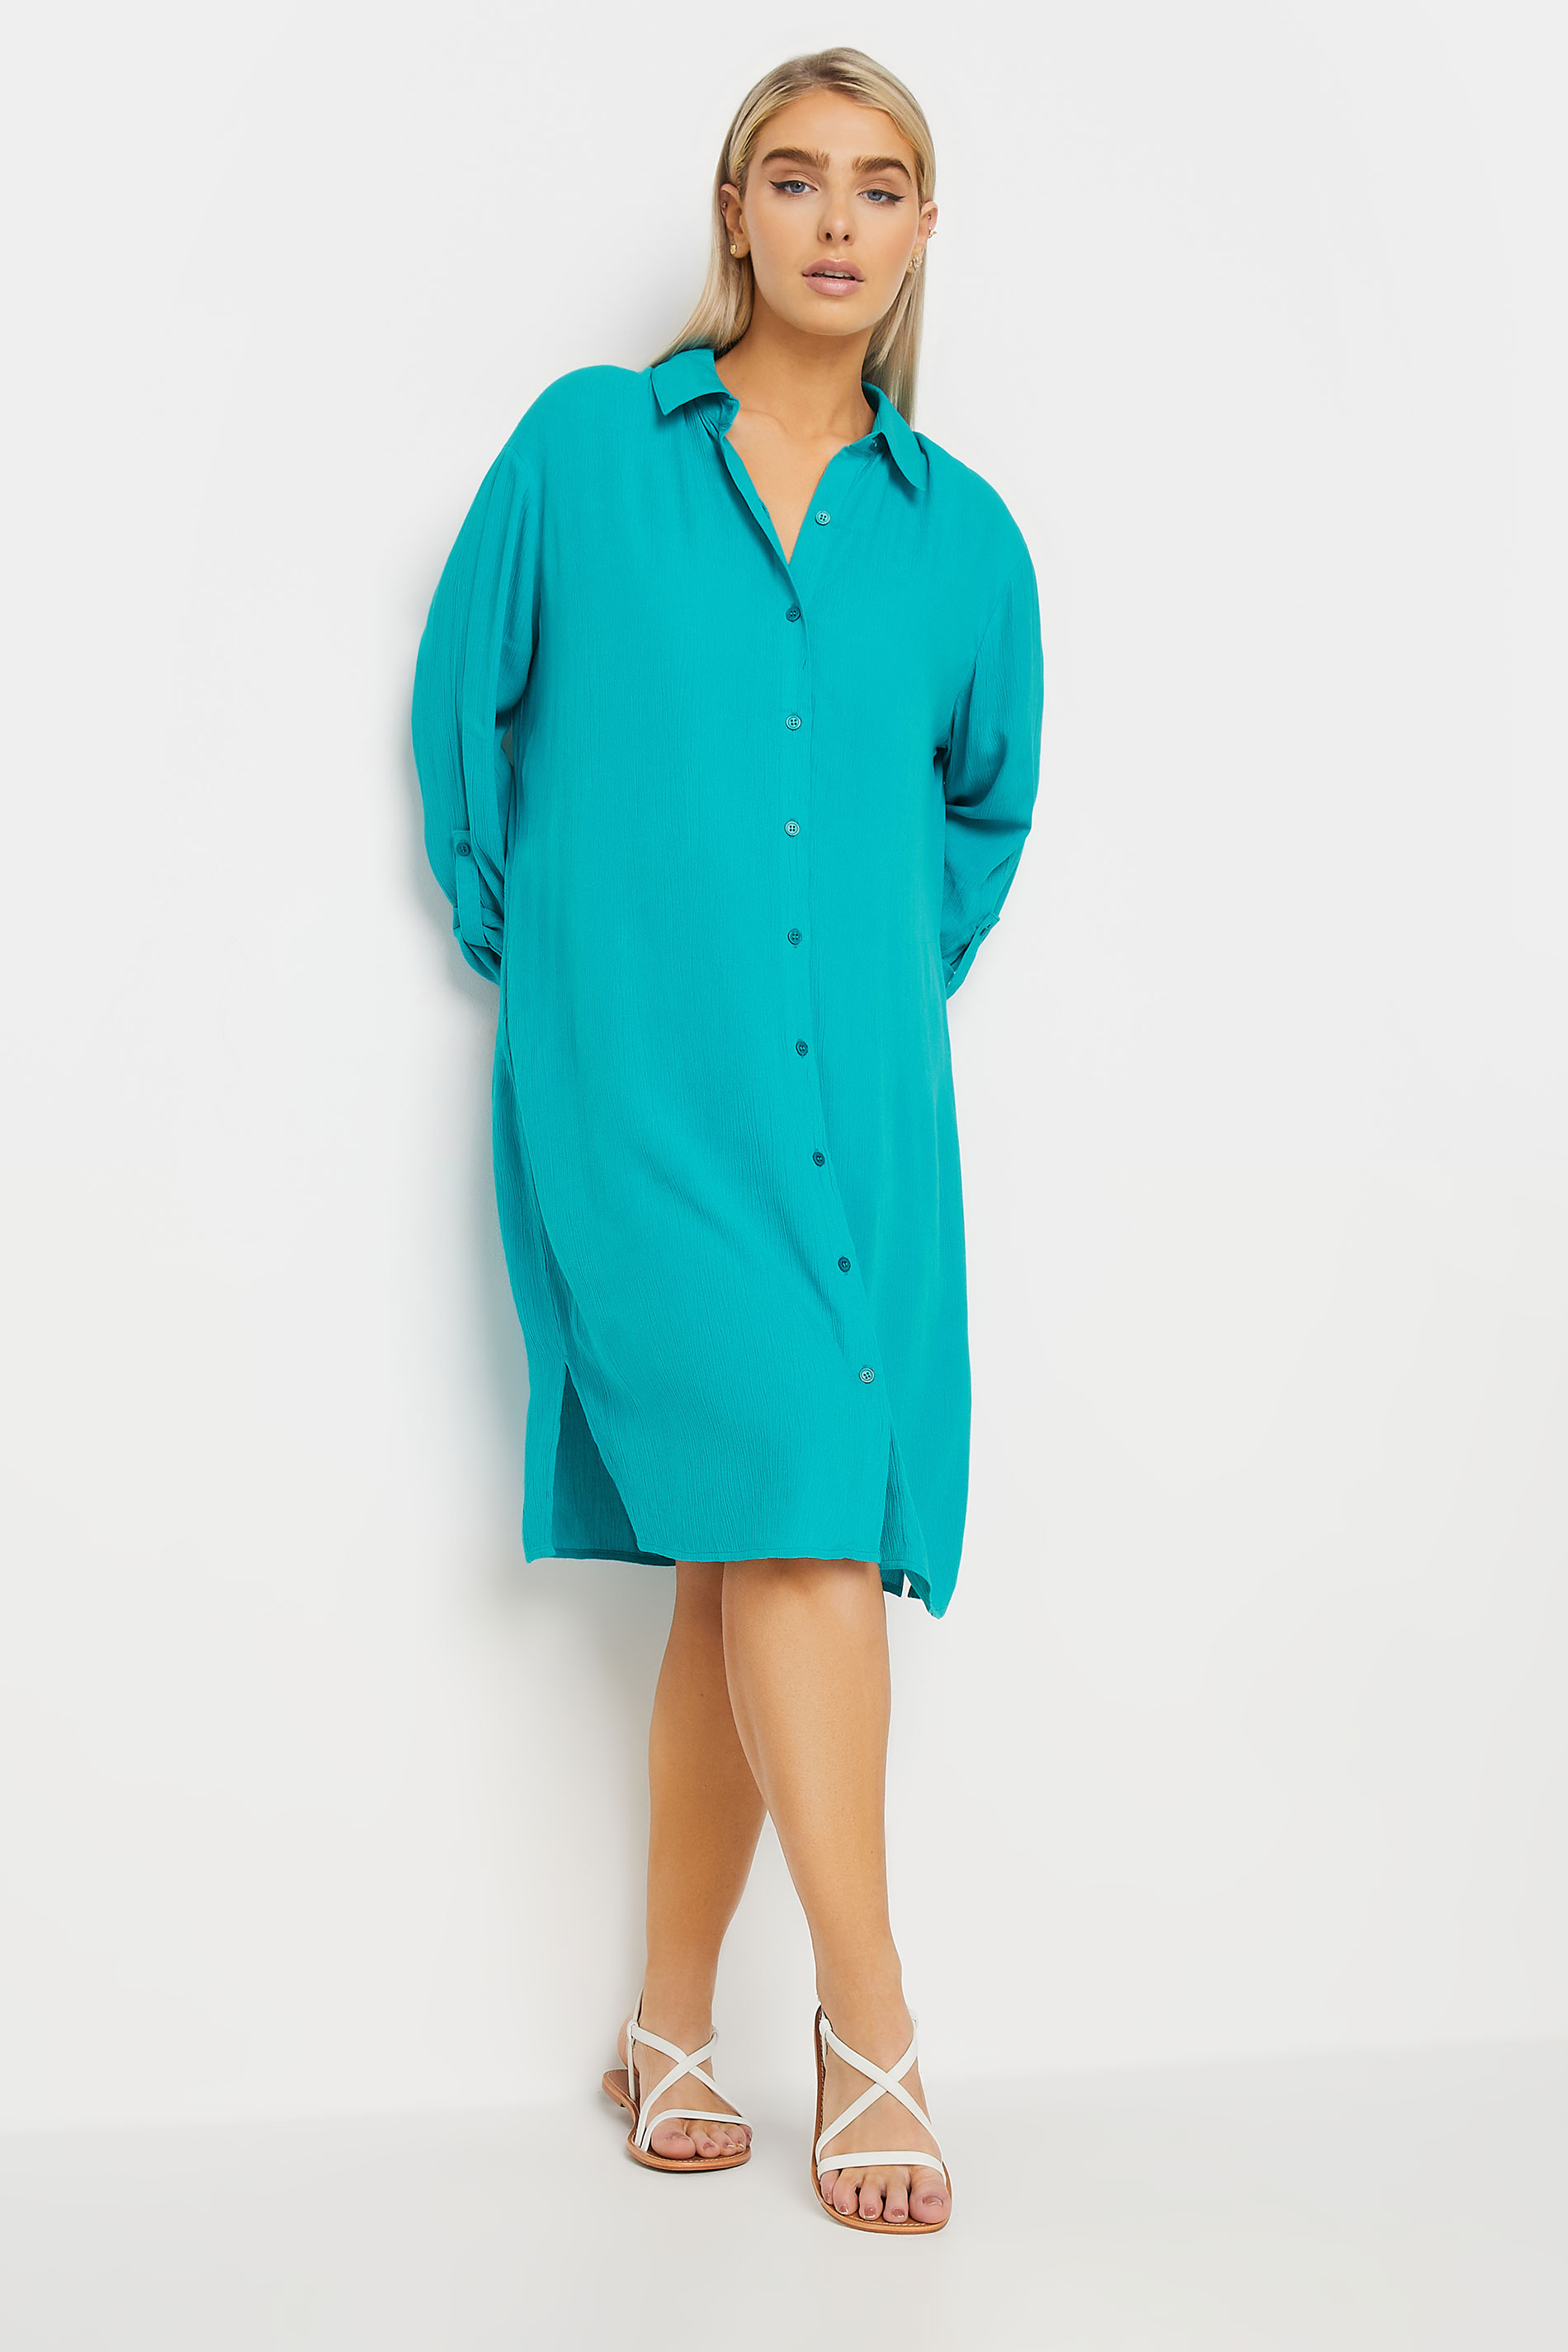 M&Co Turquoise Blue Long Sleeve Crinkle Shirt Dress | M&Co 1